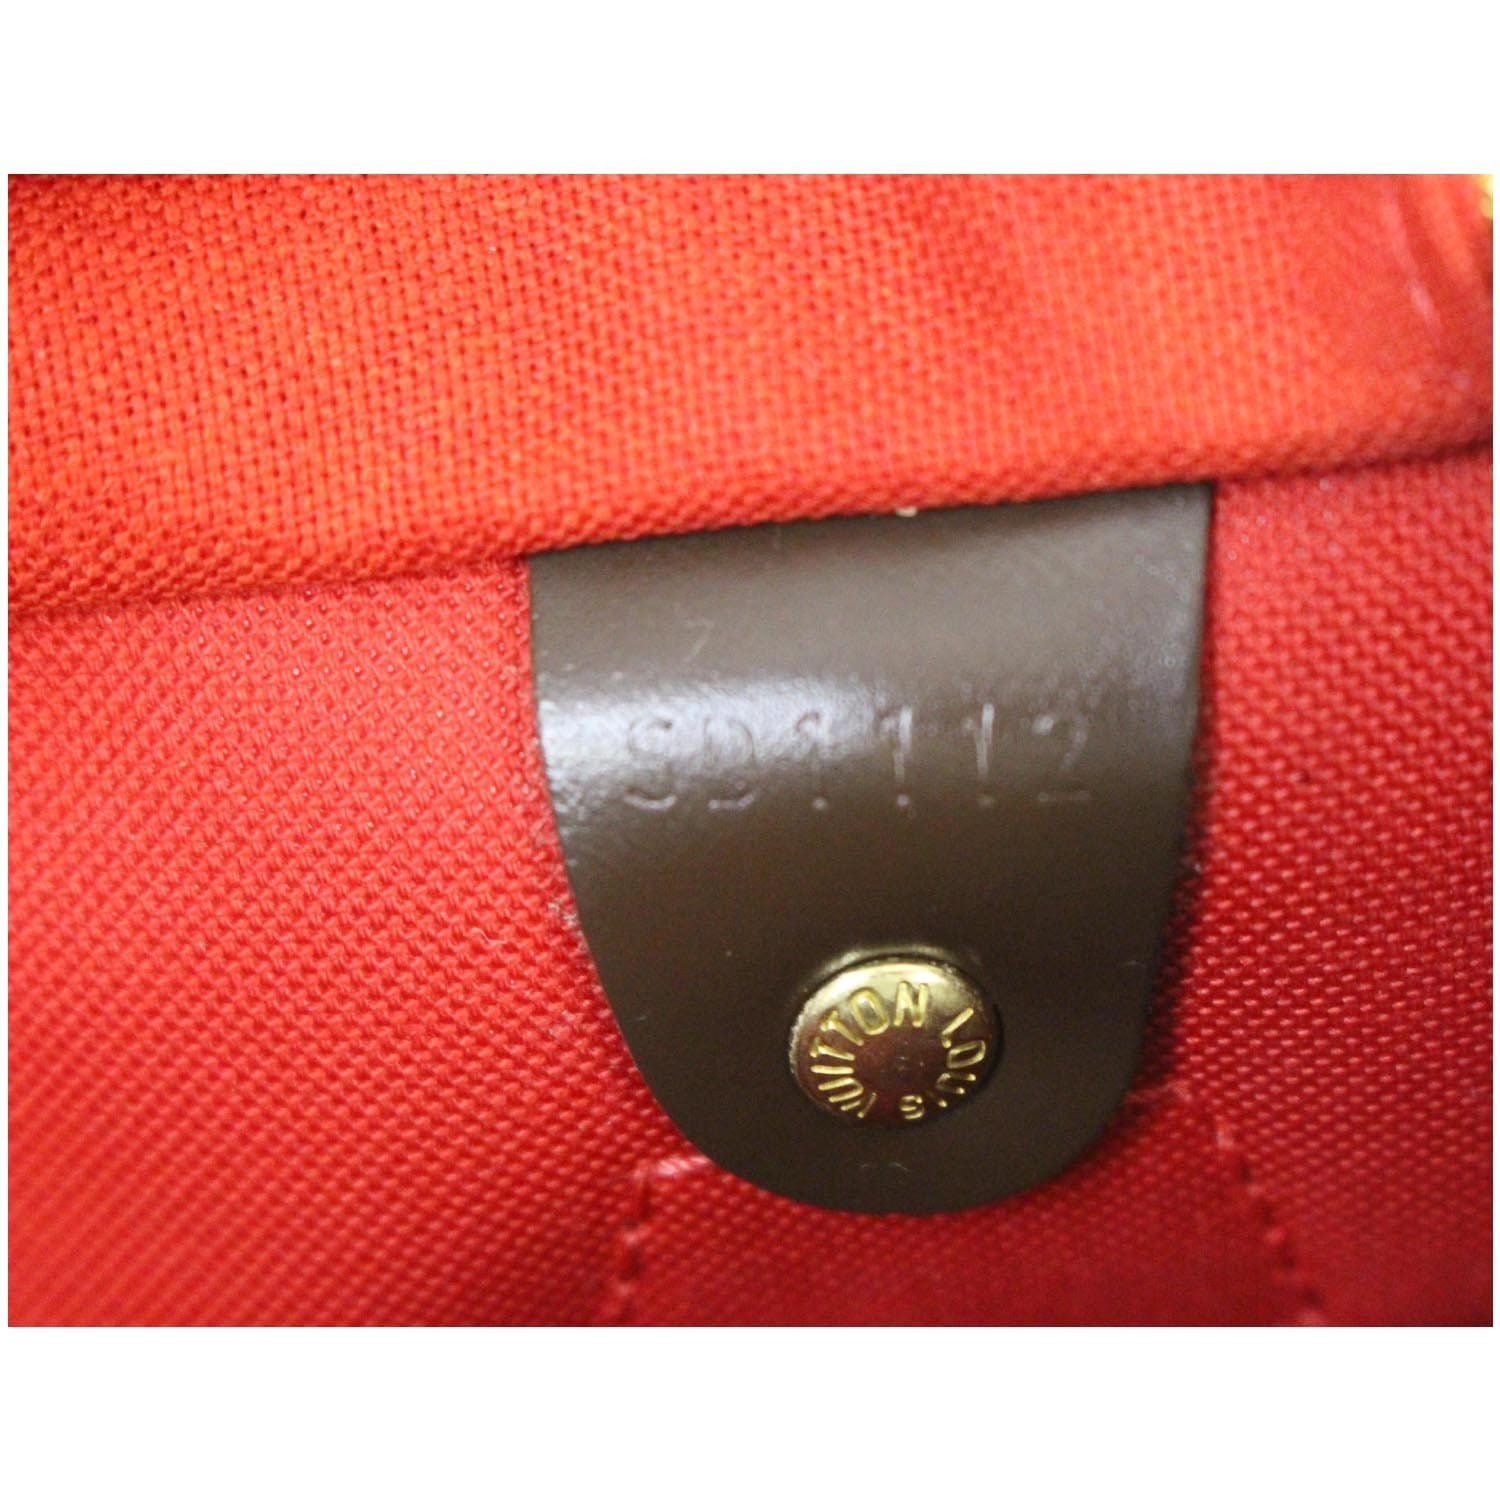 Xcond luxury brands - 💗💓💜LV box scott bag is superb